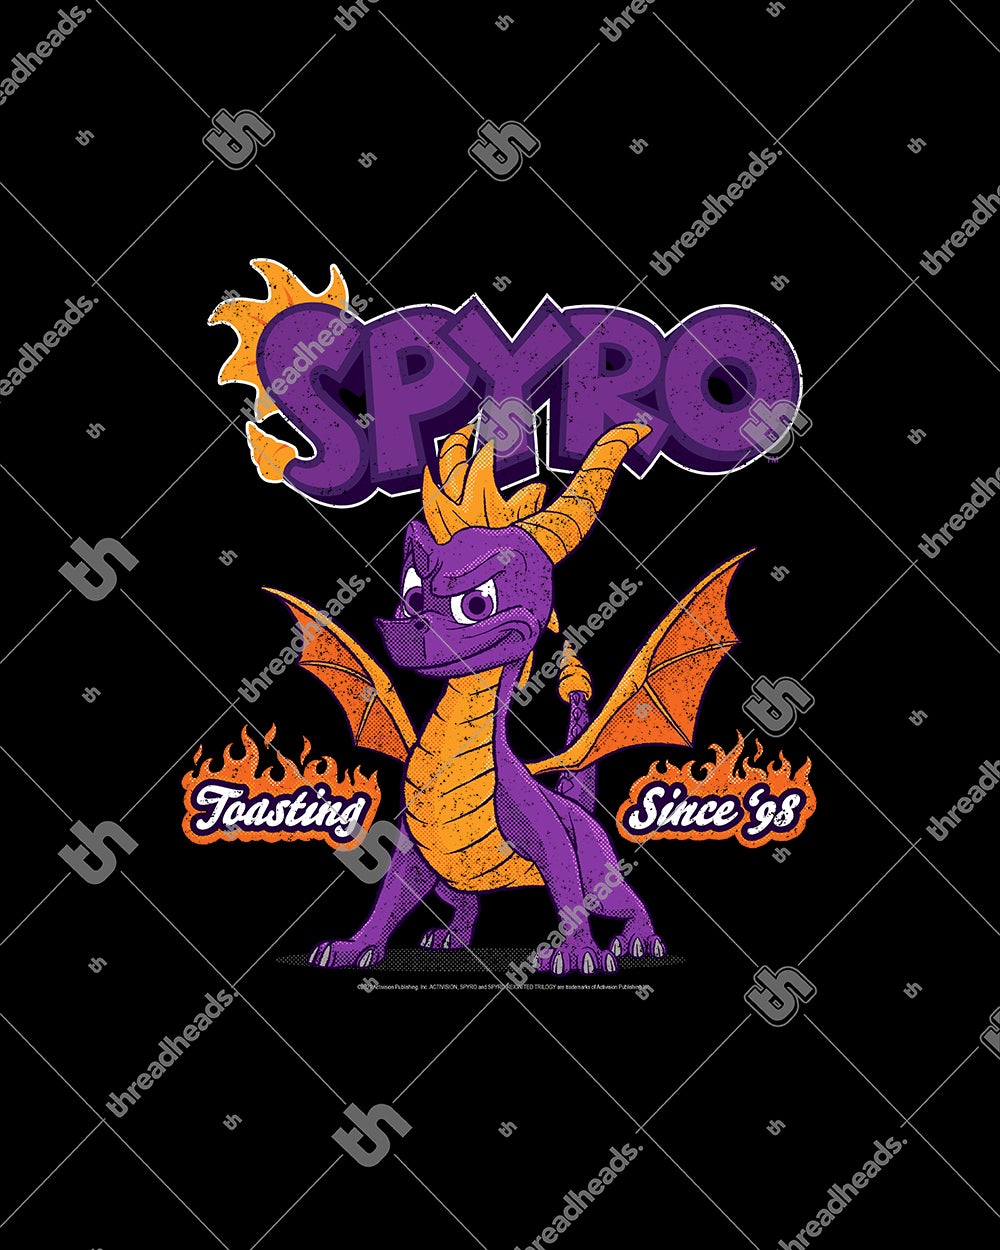 Spyro Toasting Since 98 Kids Sweater Australia Online #colour_black